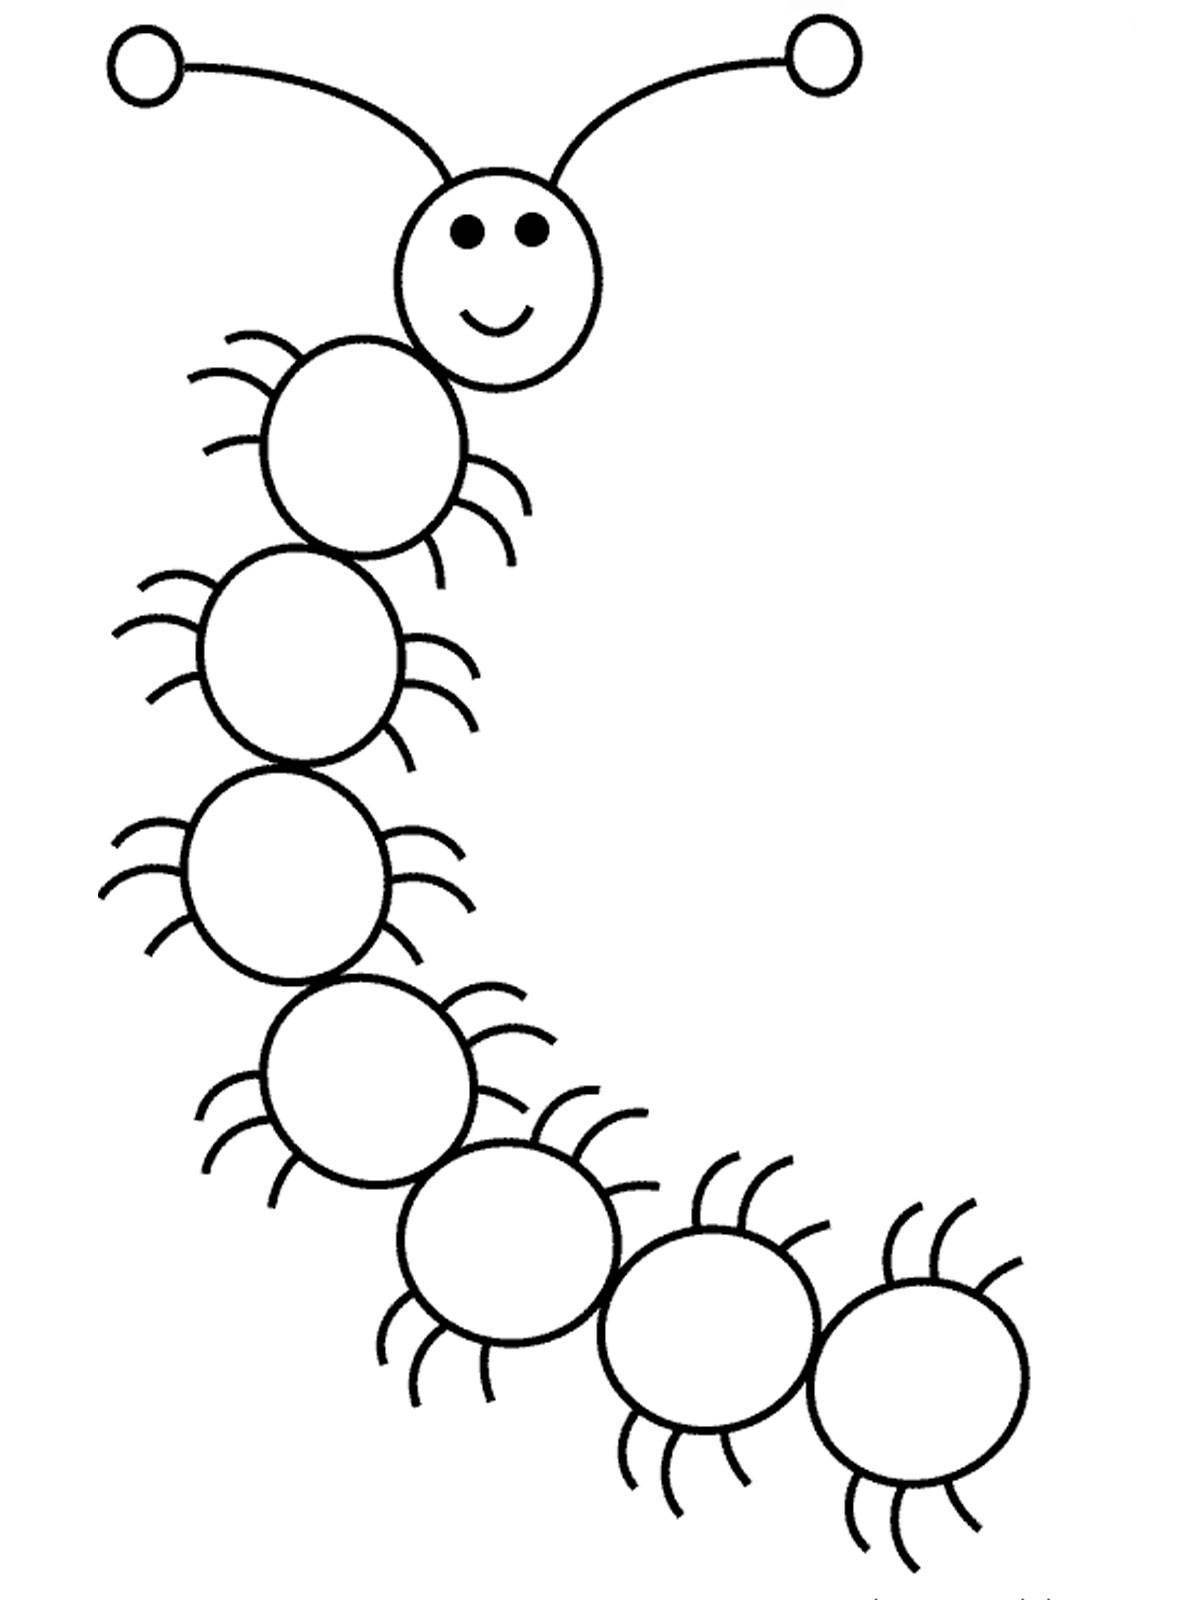 Creative caterpillar coloring book for teens